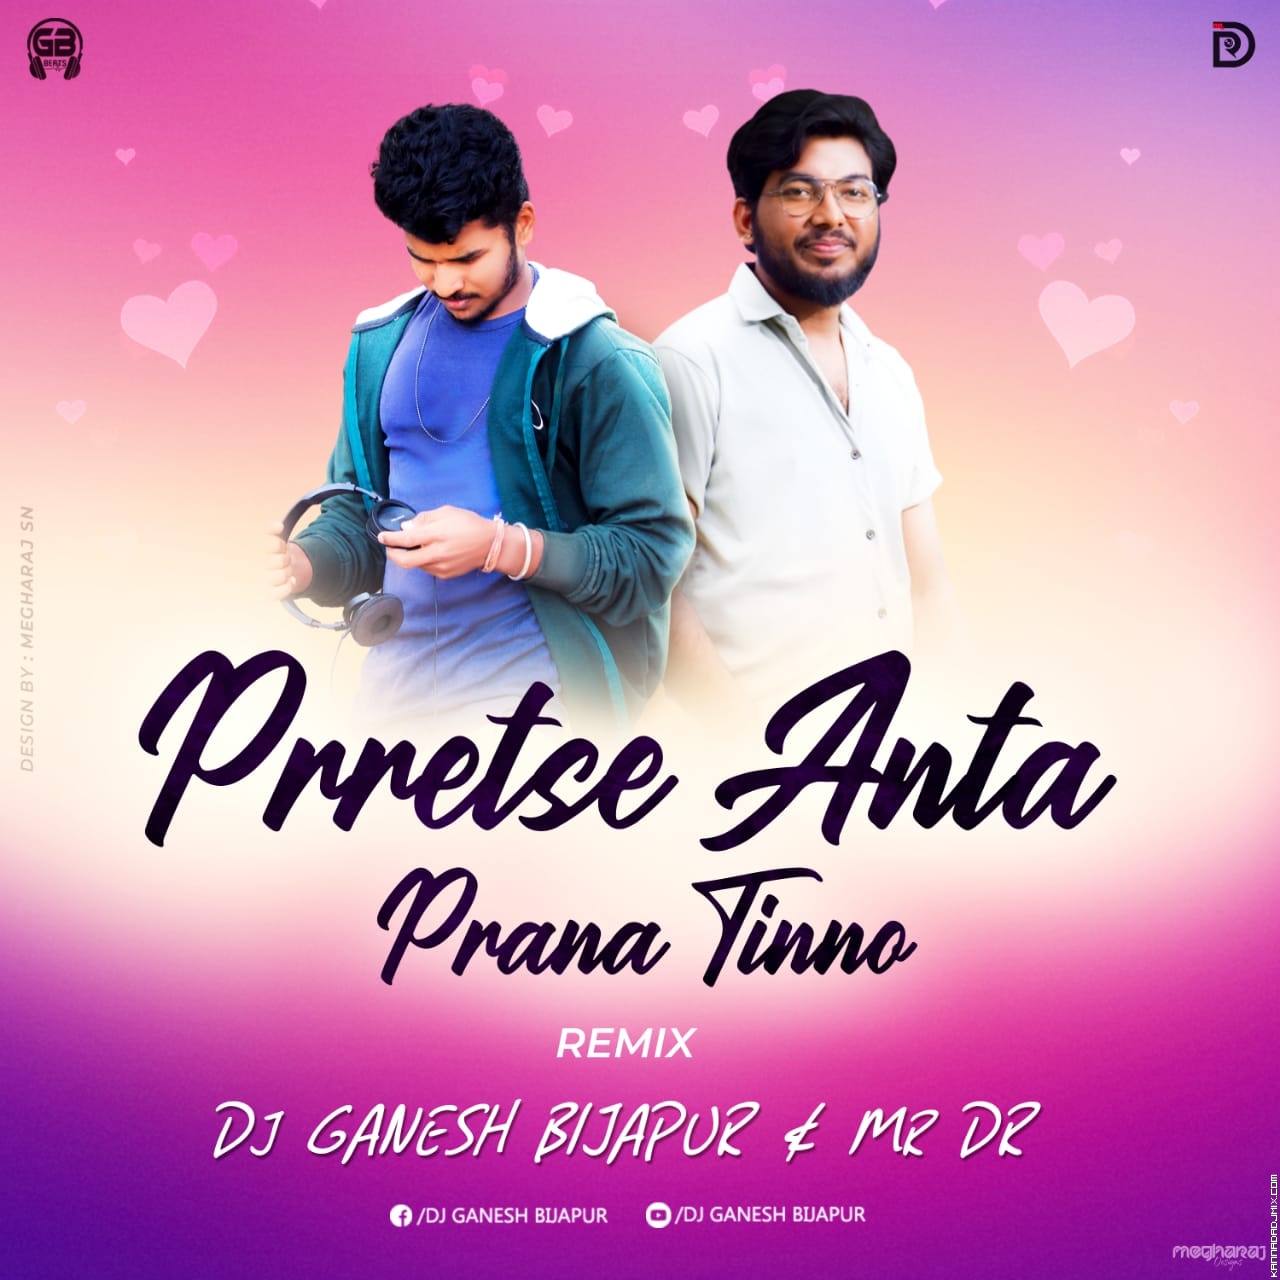 Preethse Anta Prana Tinno Remix Dj Ganesh Bijapur X Mr DR GeepB.mp3